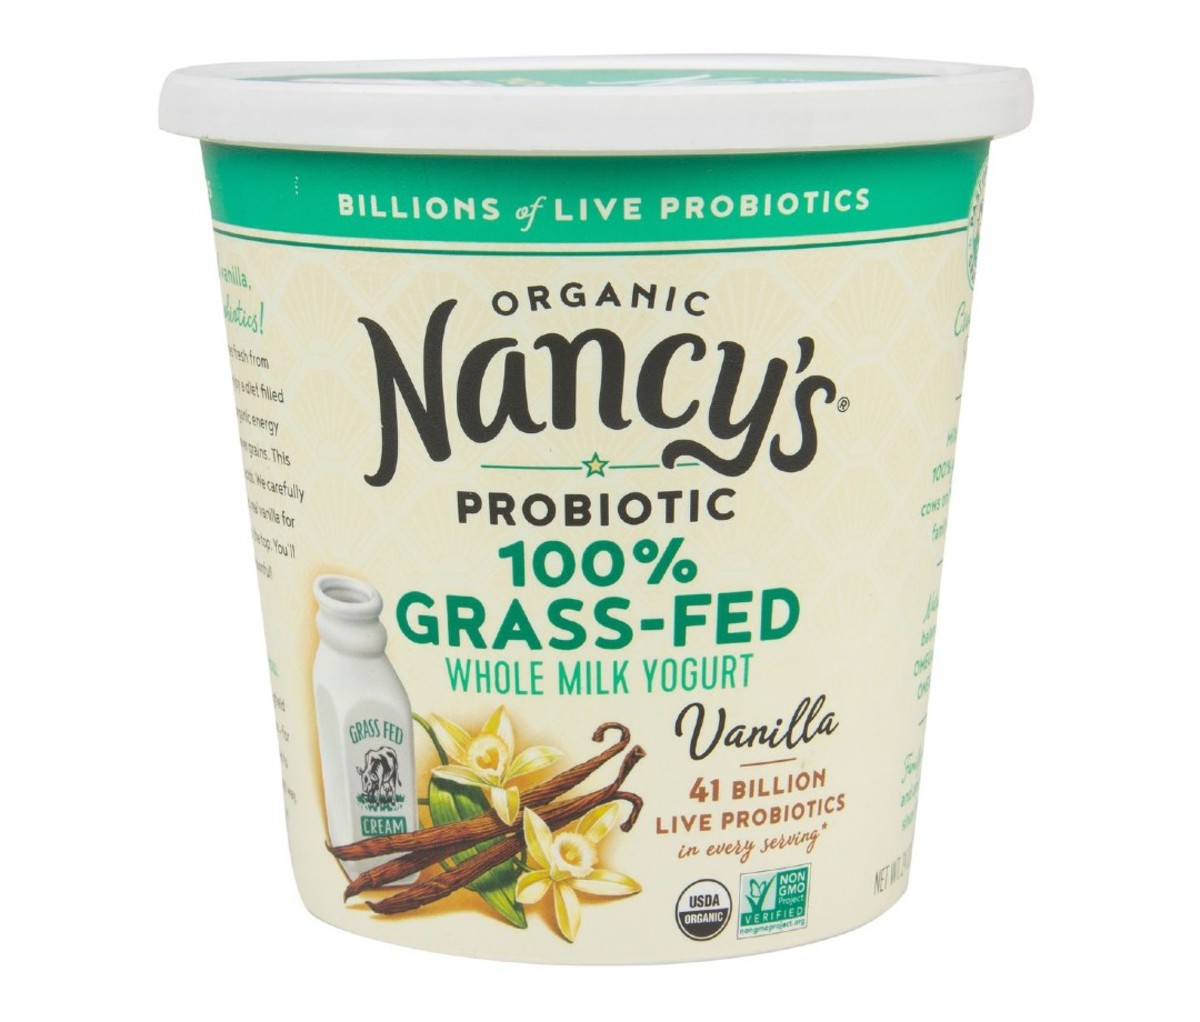 Nancy’s Organic 100% Grass-Fed Yogurt